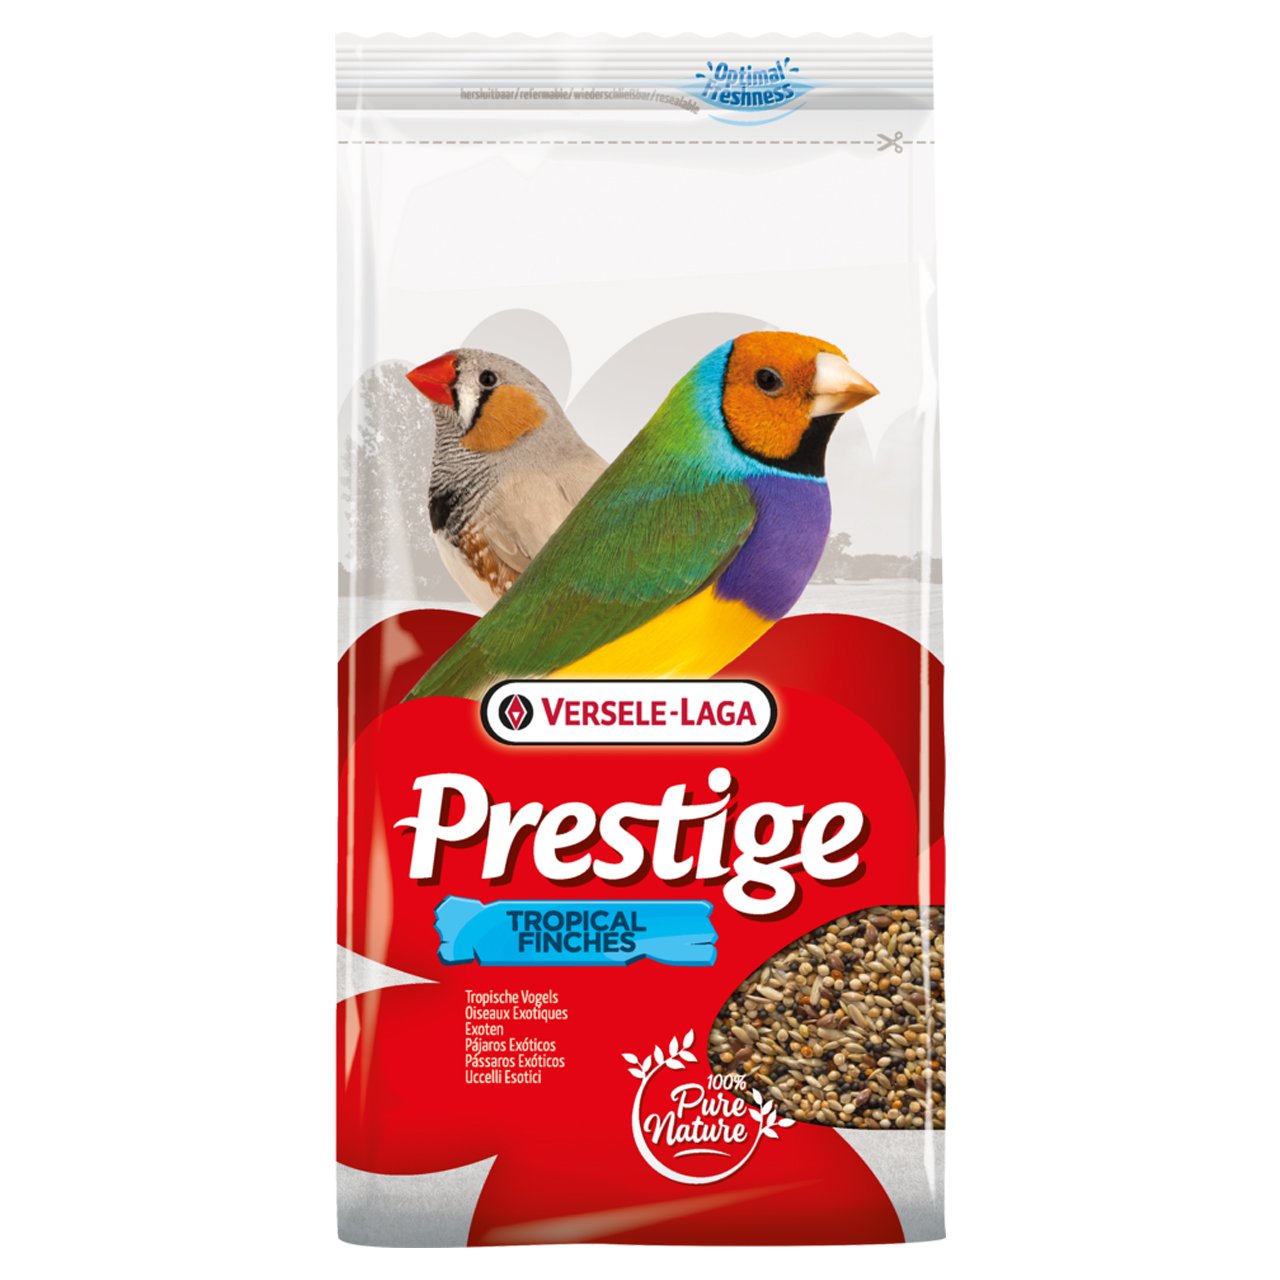 Versele Laga Prestige Tropical Finches Finç Yemi 1 kg (Orijinal Paket)